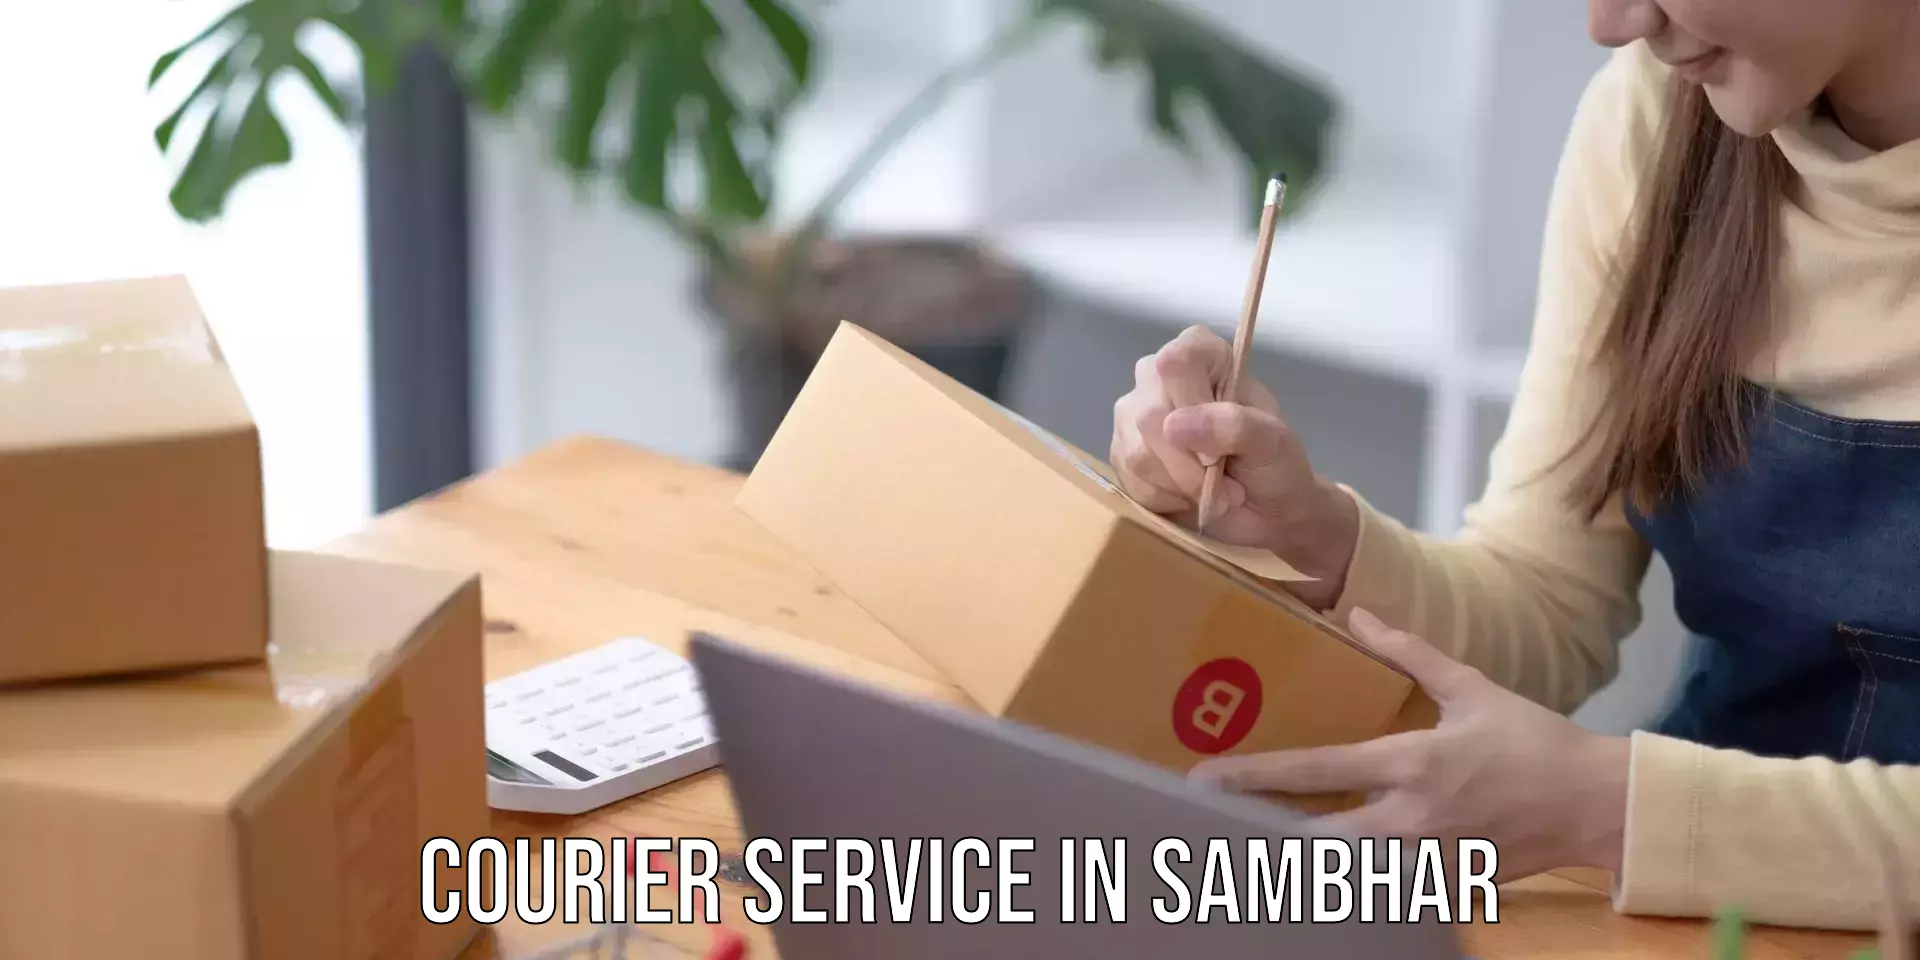 Business delivery service in Sambhar